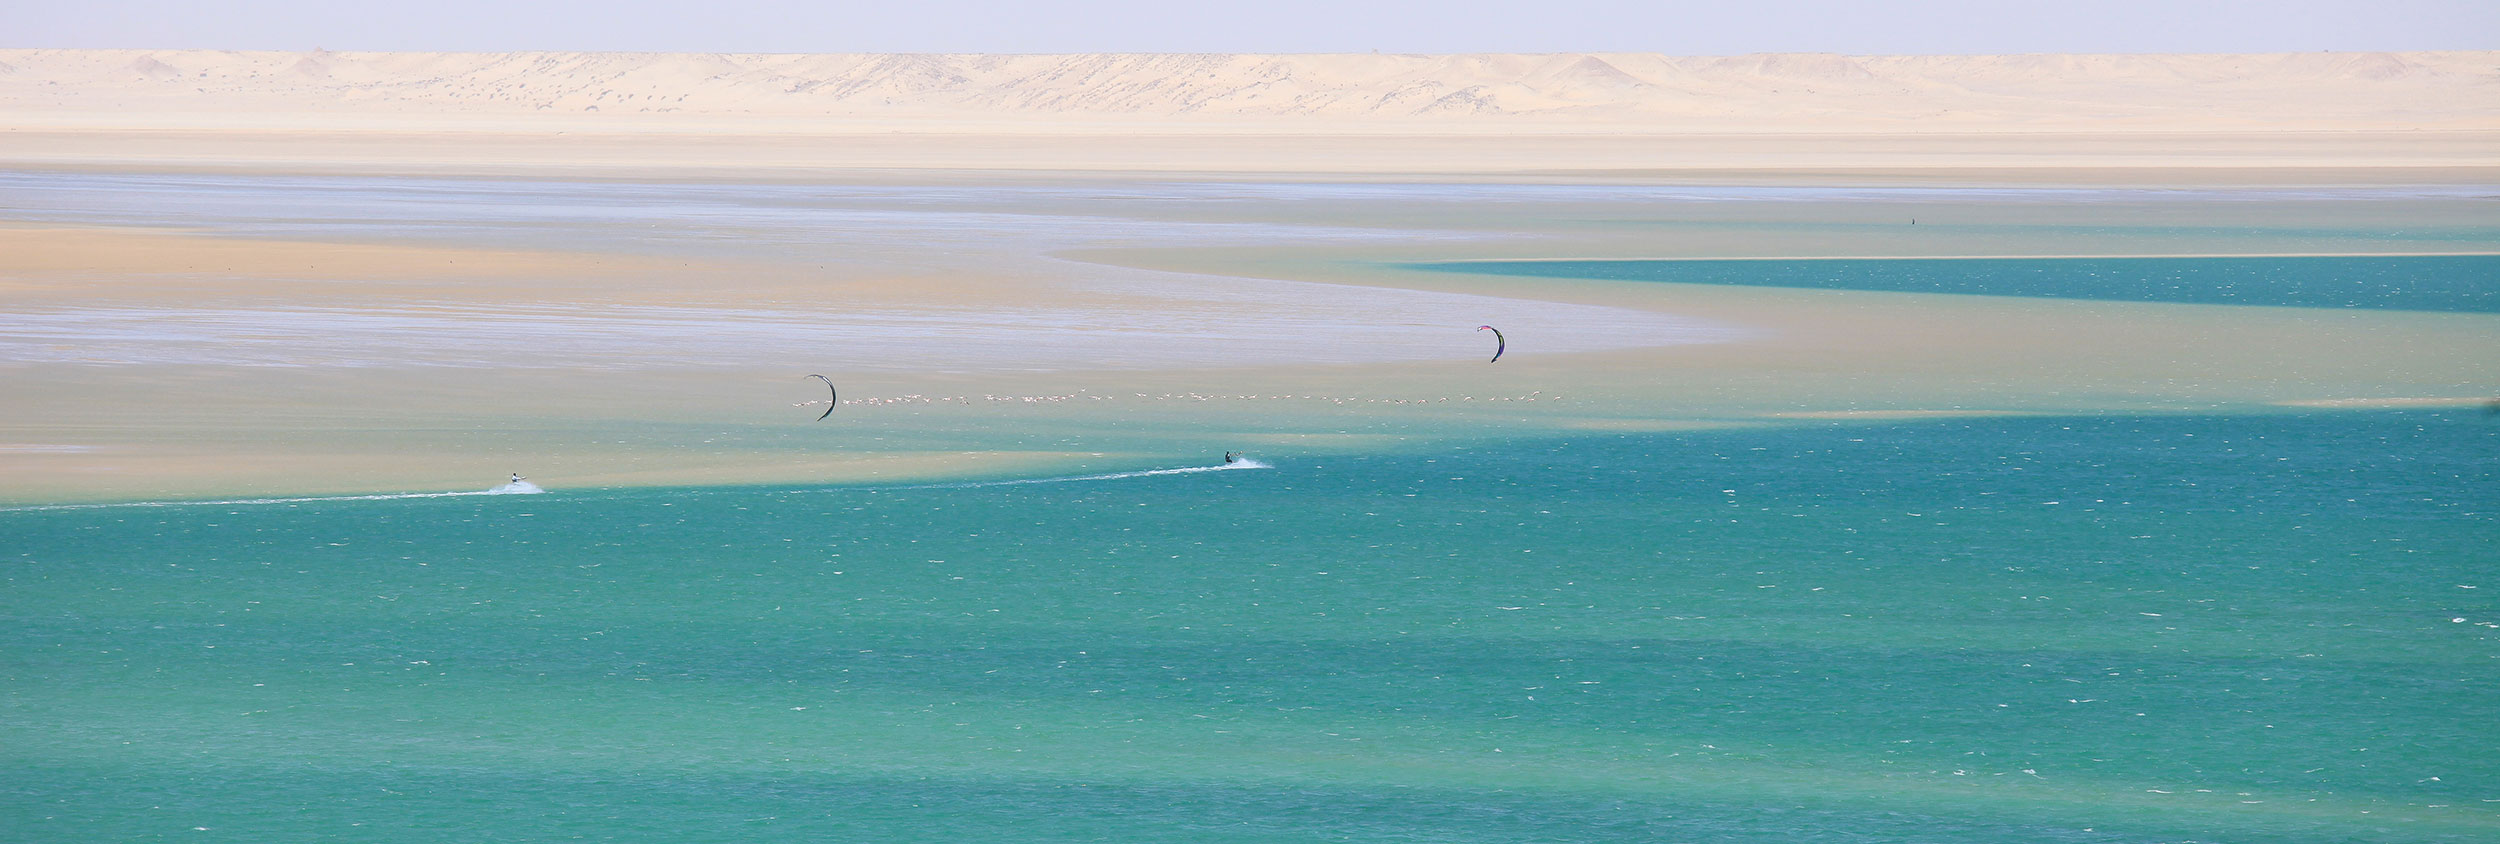 Kitesurfing Speed Spot, Dakhla Morocco by Club Mistral